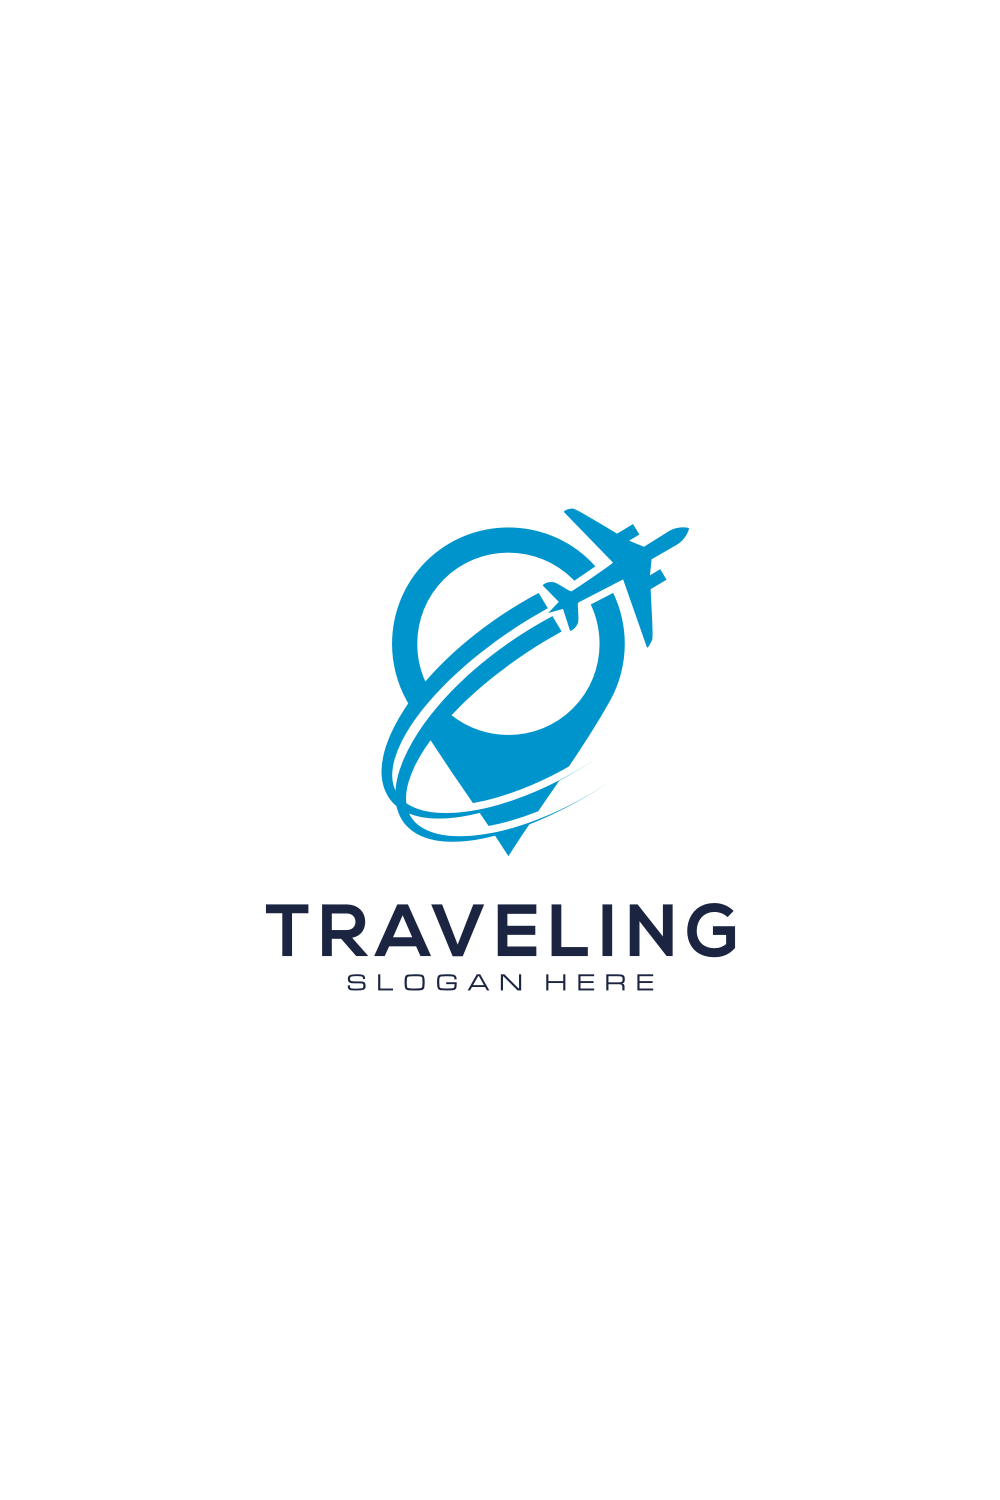 Travel Logo with Pin Shape pinterest image.